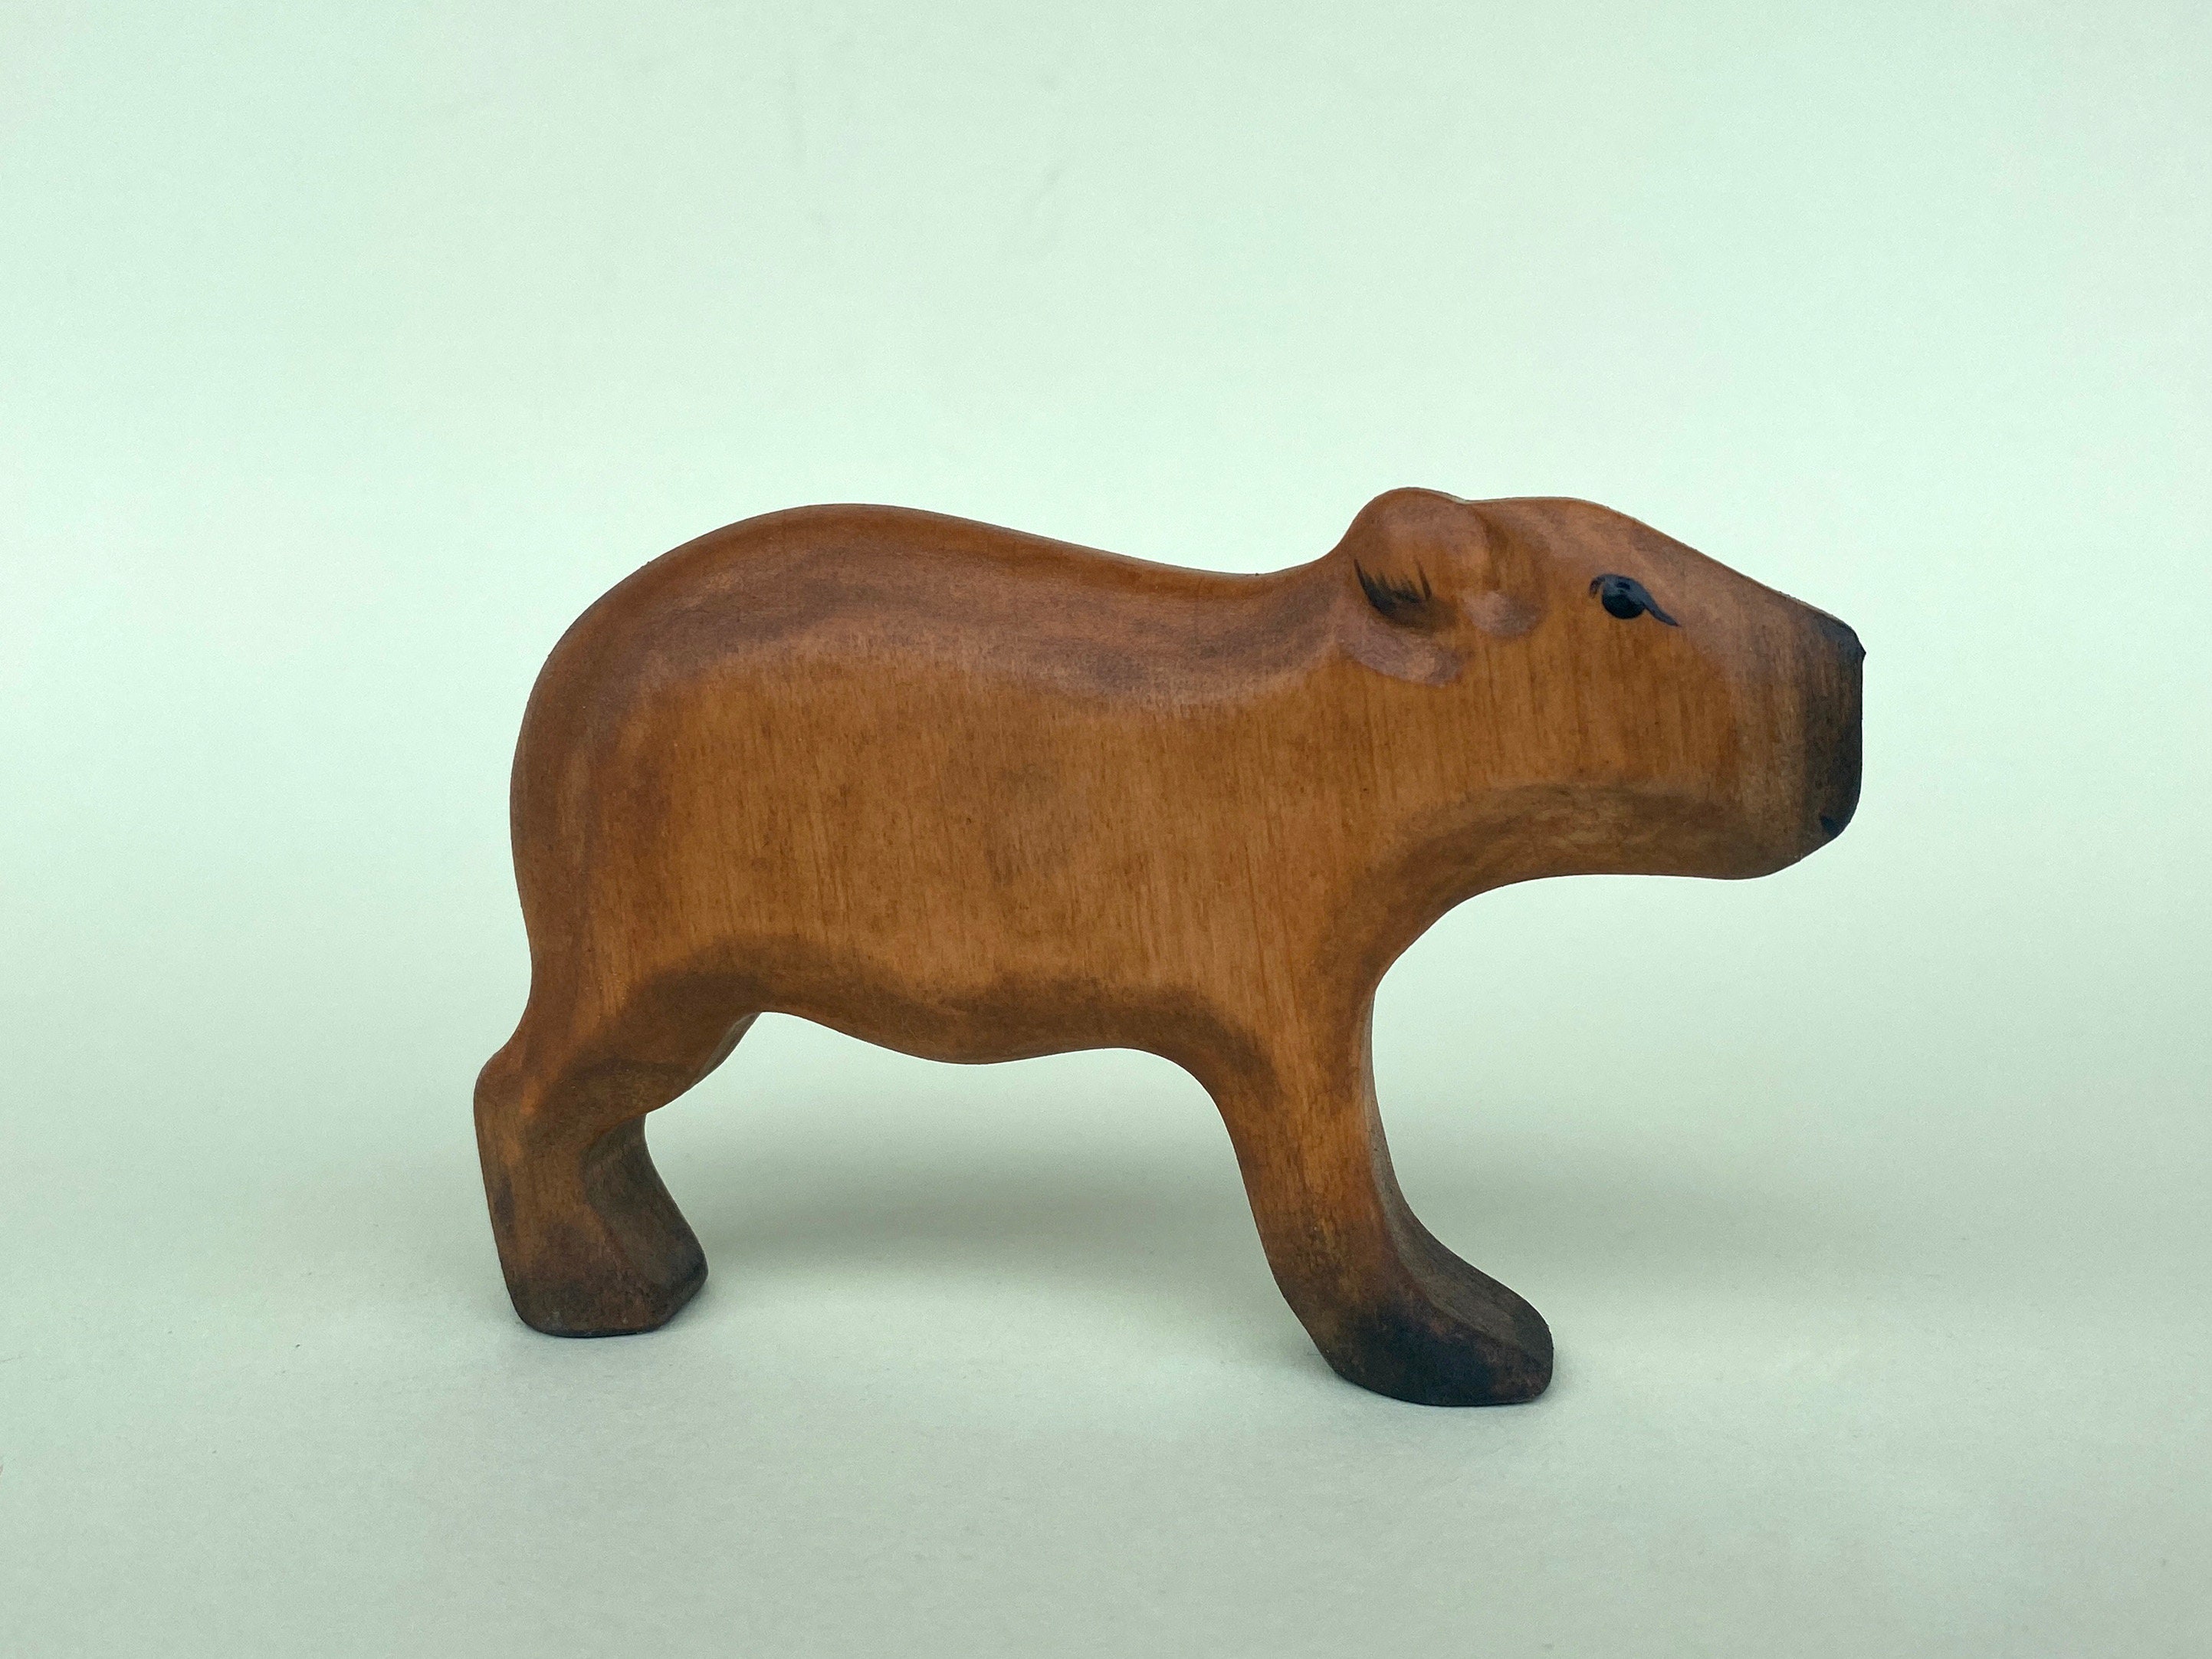  Yopcuvi Capybara Statue Animal Ornament, Capybara